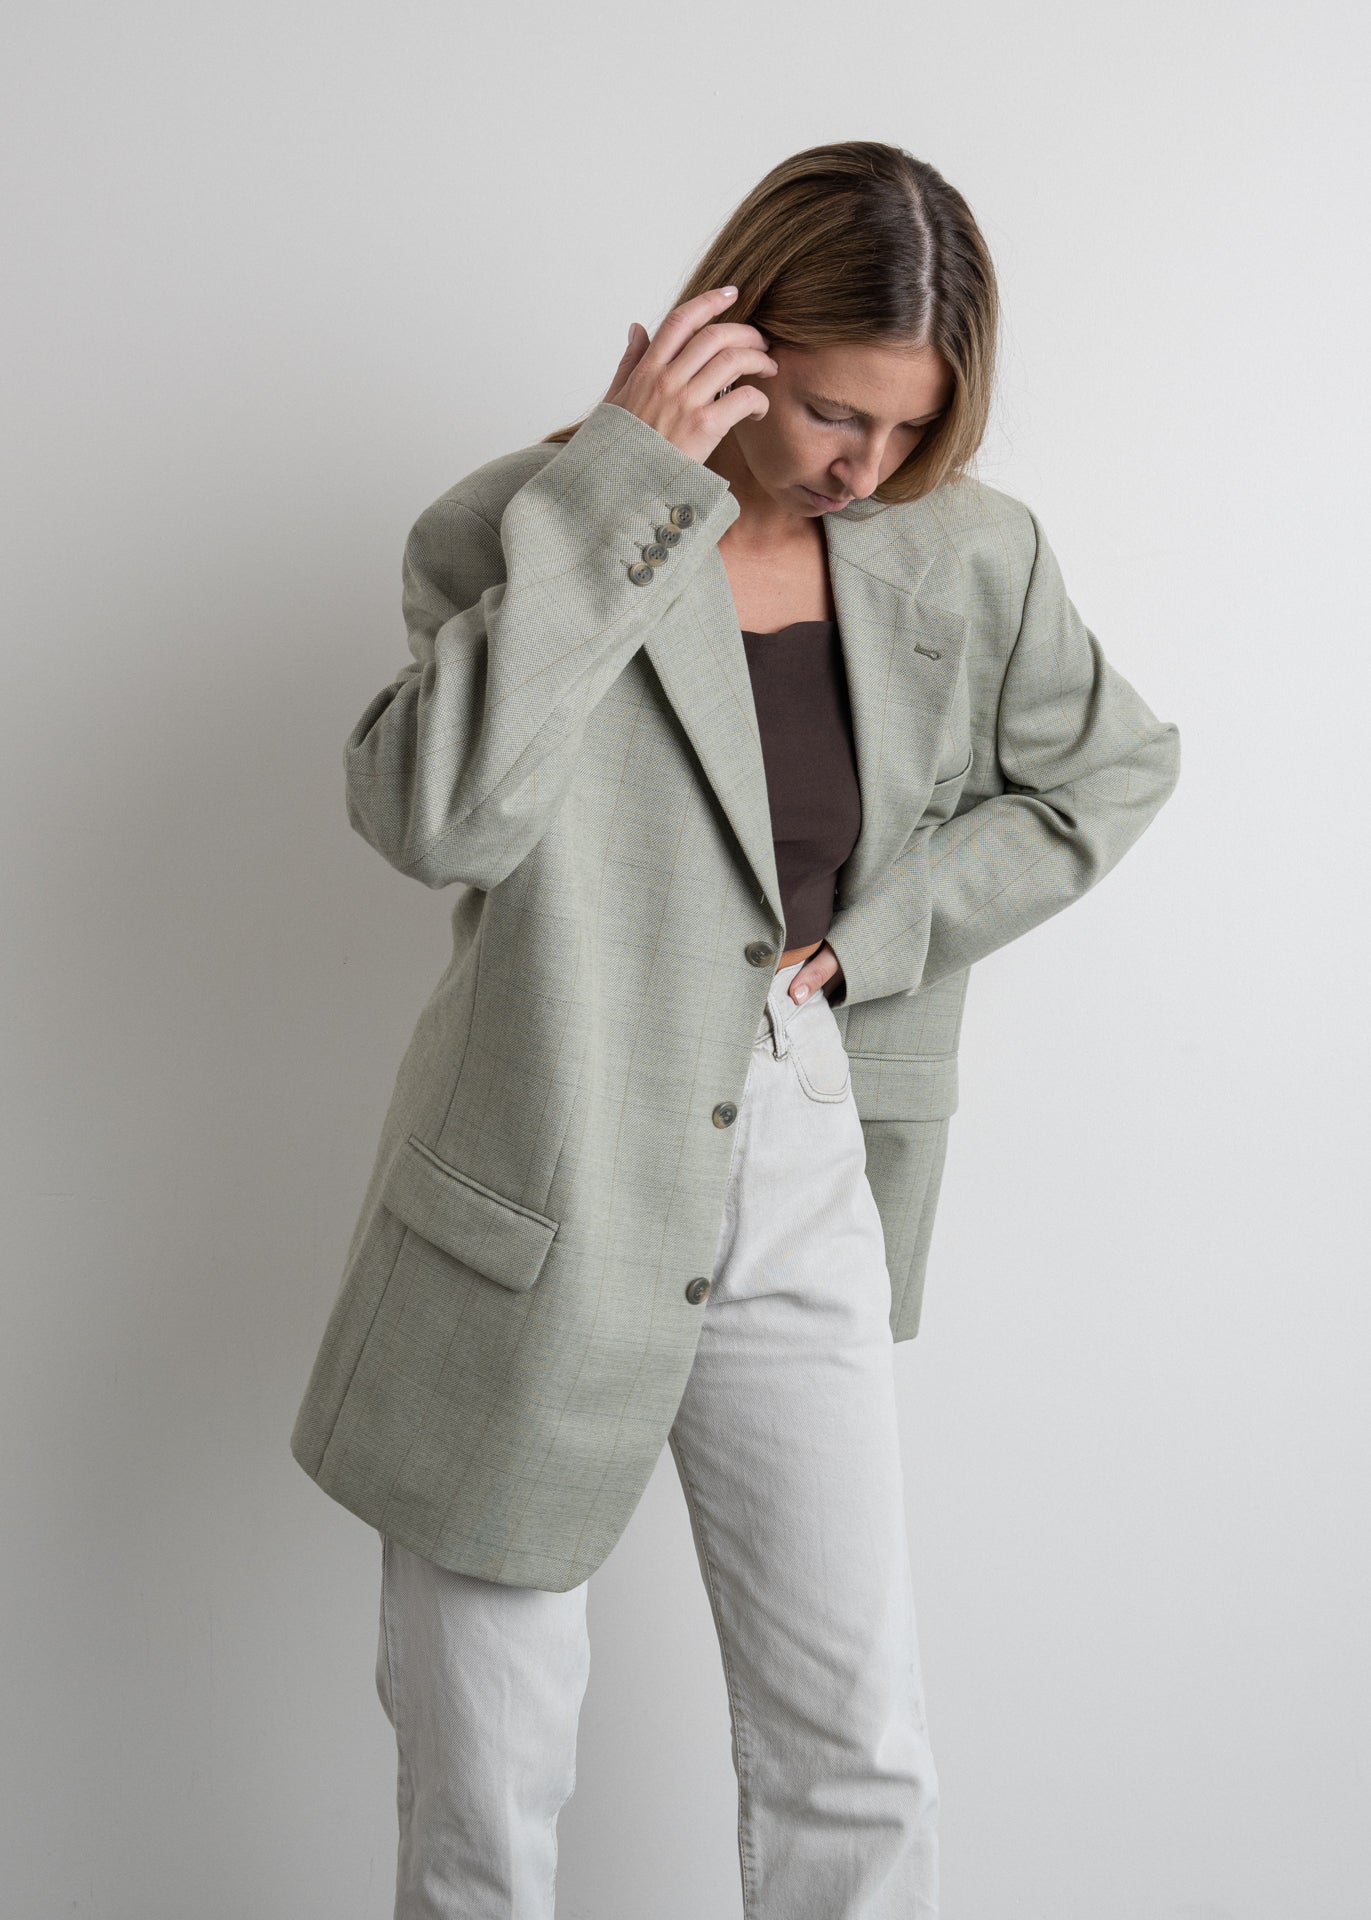 Vintage Oversized Blazer in Grey & Green Tones